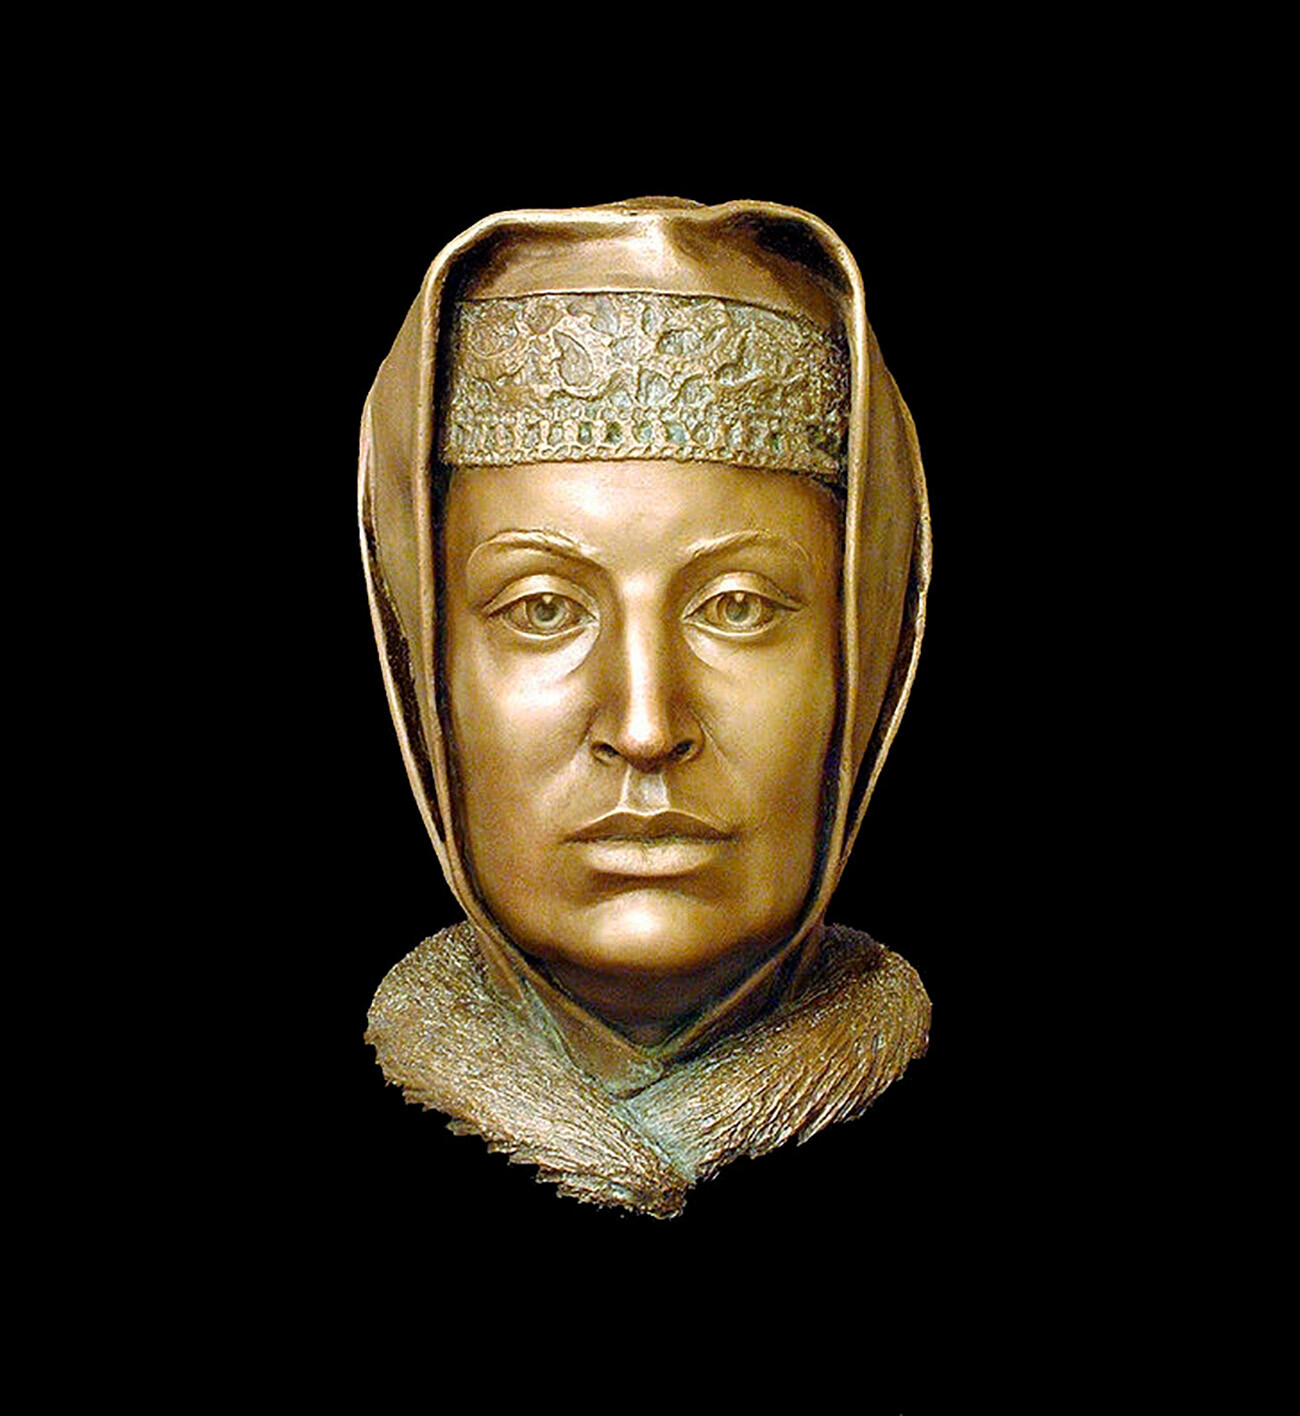 Moscow Grand Princess Sophia Palaiologina (ca. 1455 - April 7, 1503). Forensic facial reconstruction by S. A. Nikitin, 1994.